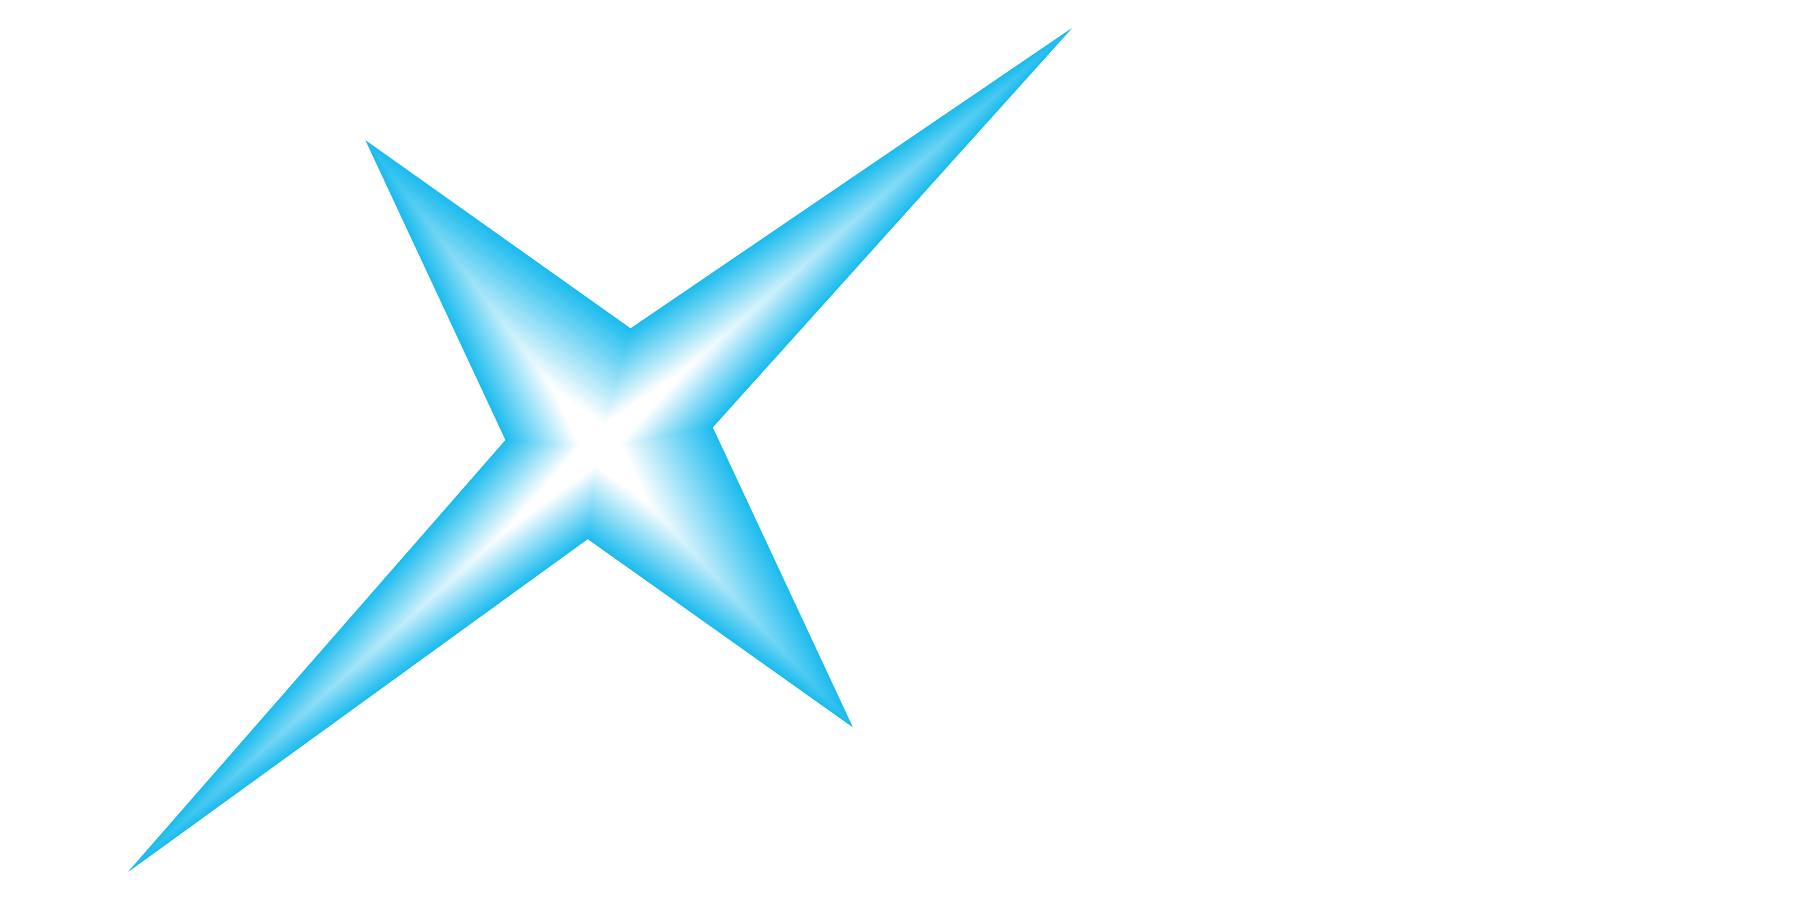 Nex Pro logo web header CROPPED FINALEST transp padding copyREAL